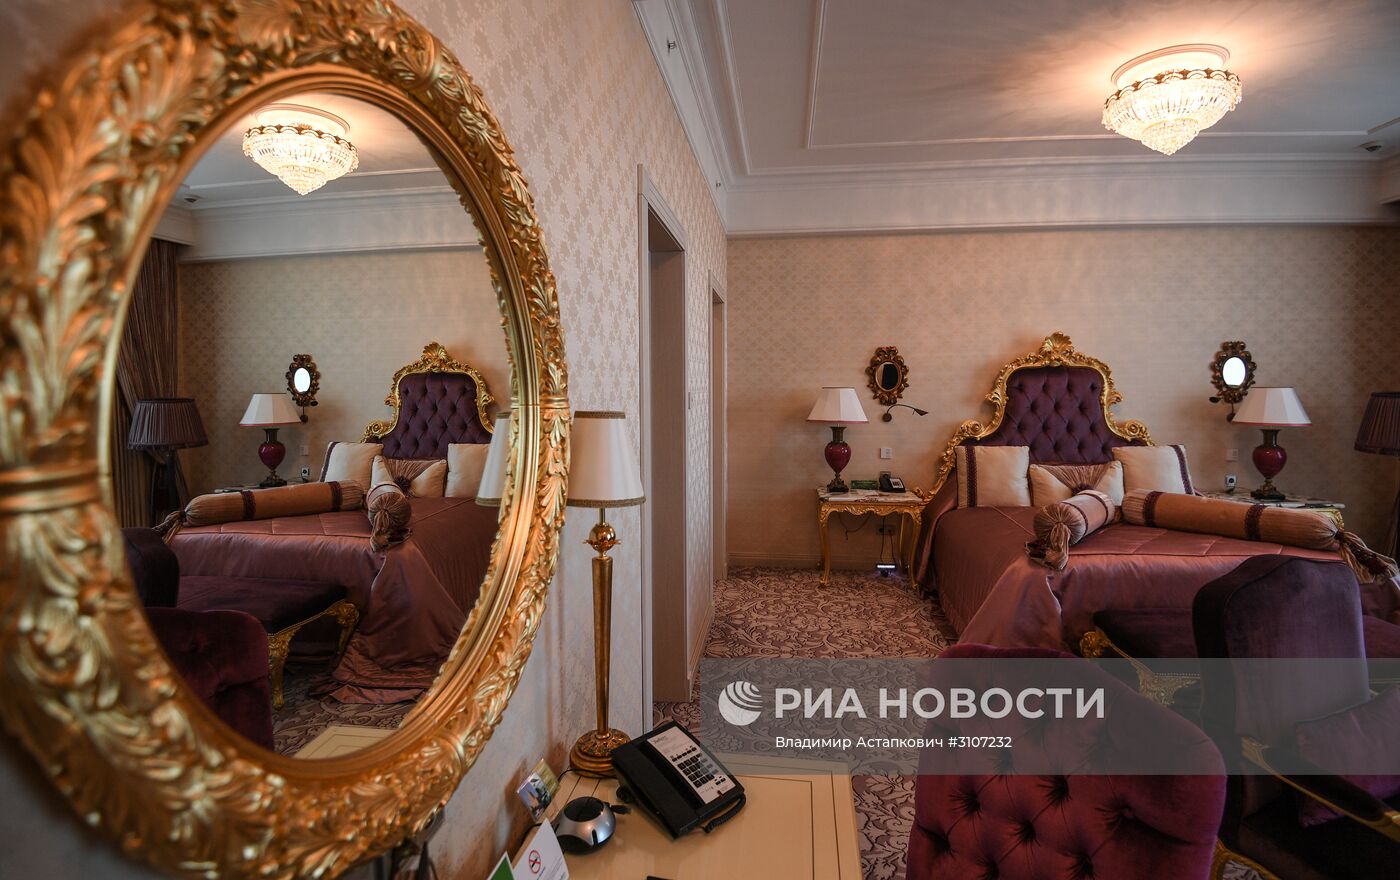 Гостиница "Украина" в предверии 60-летнего юбилея